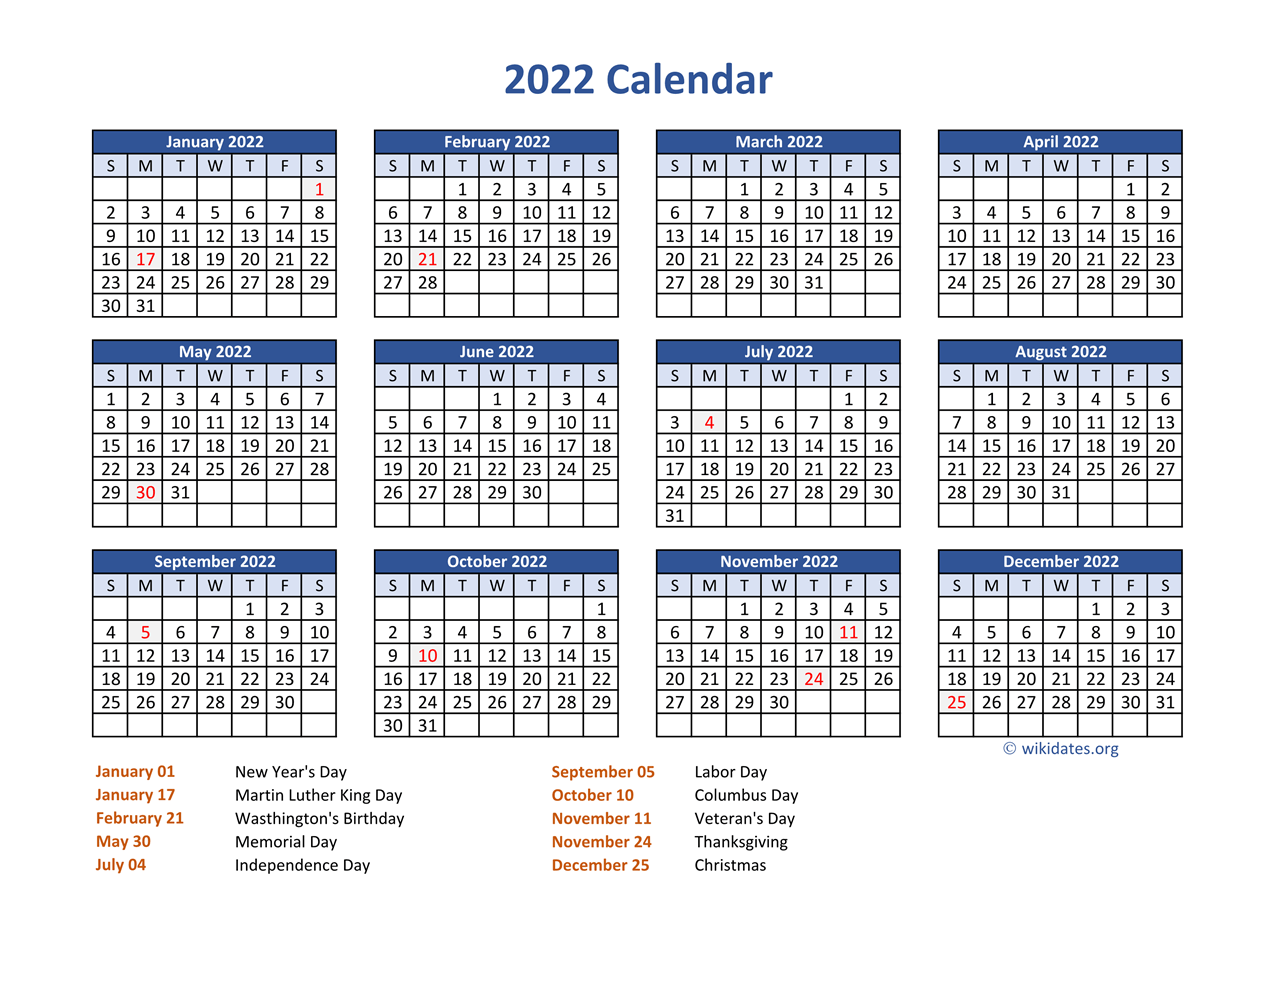 PDF Calendar 2022 with Federal Holidays